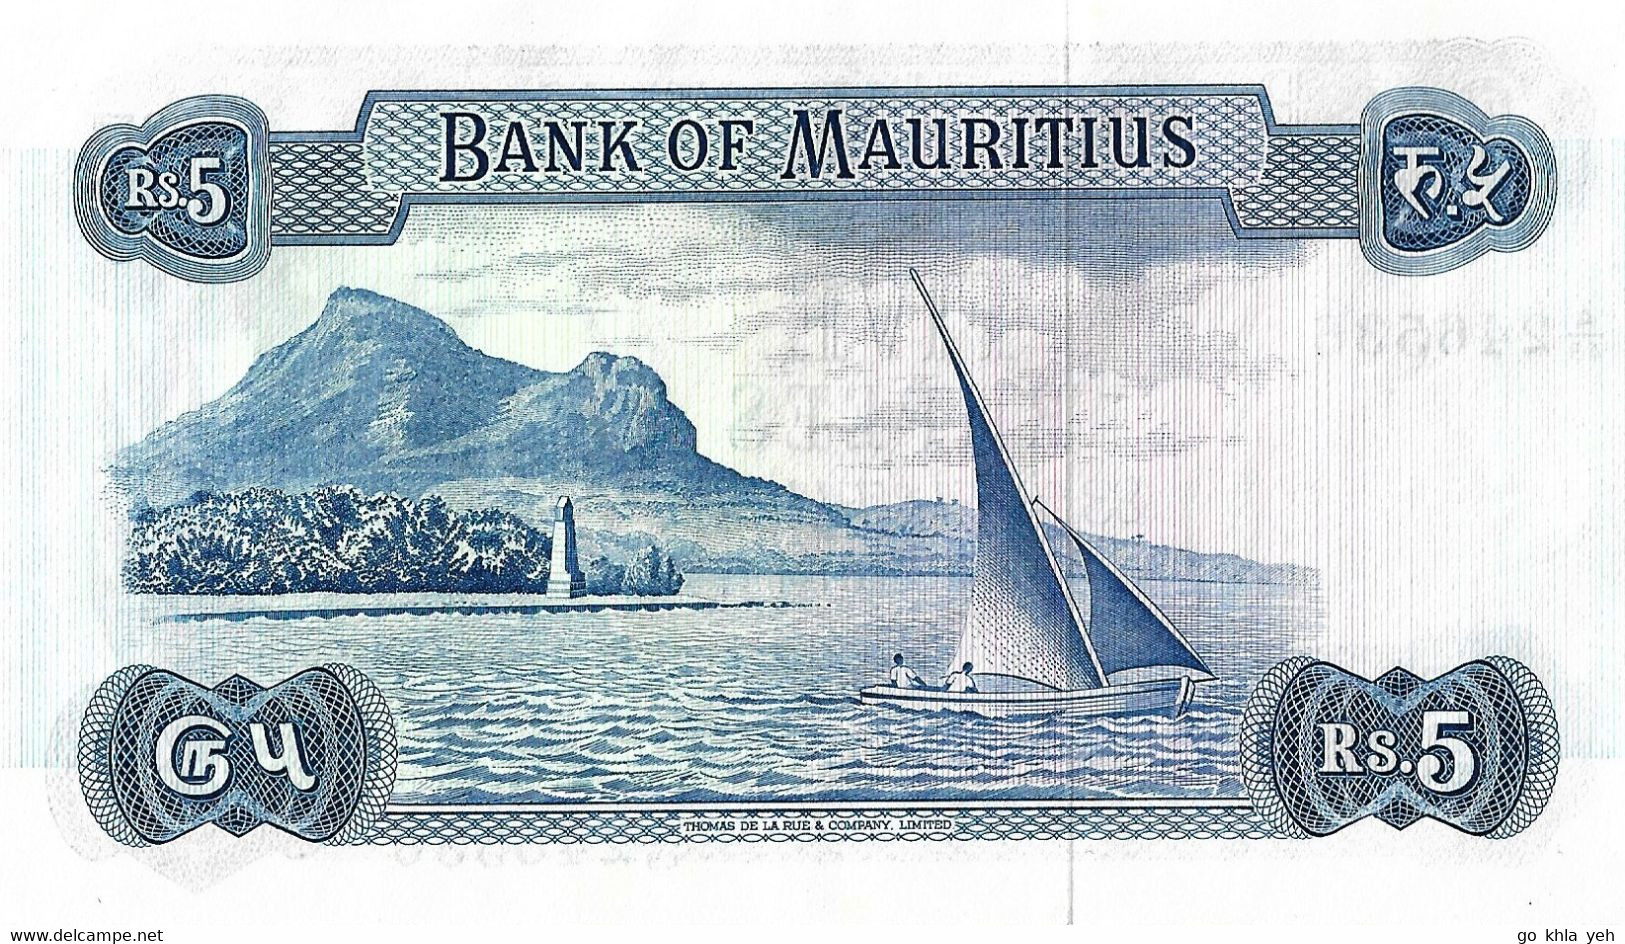 ILE MAURICE 1967 5 Rupee - P.30c  Neuf -UNC - Mauritius